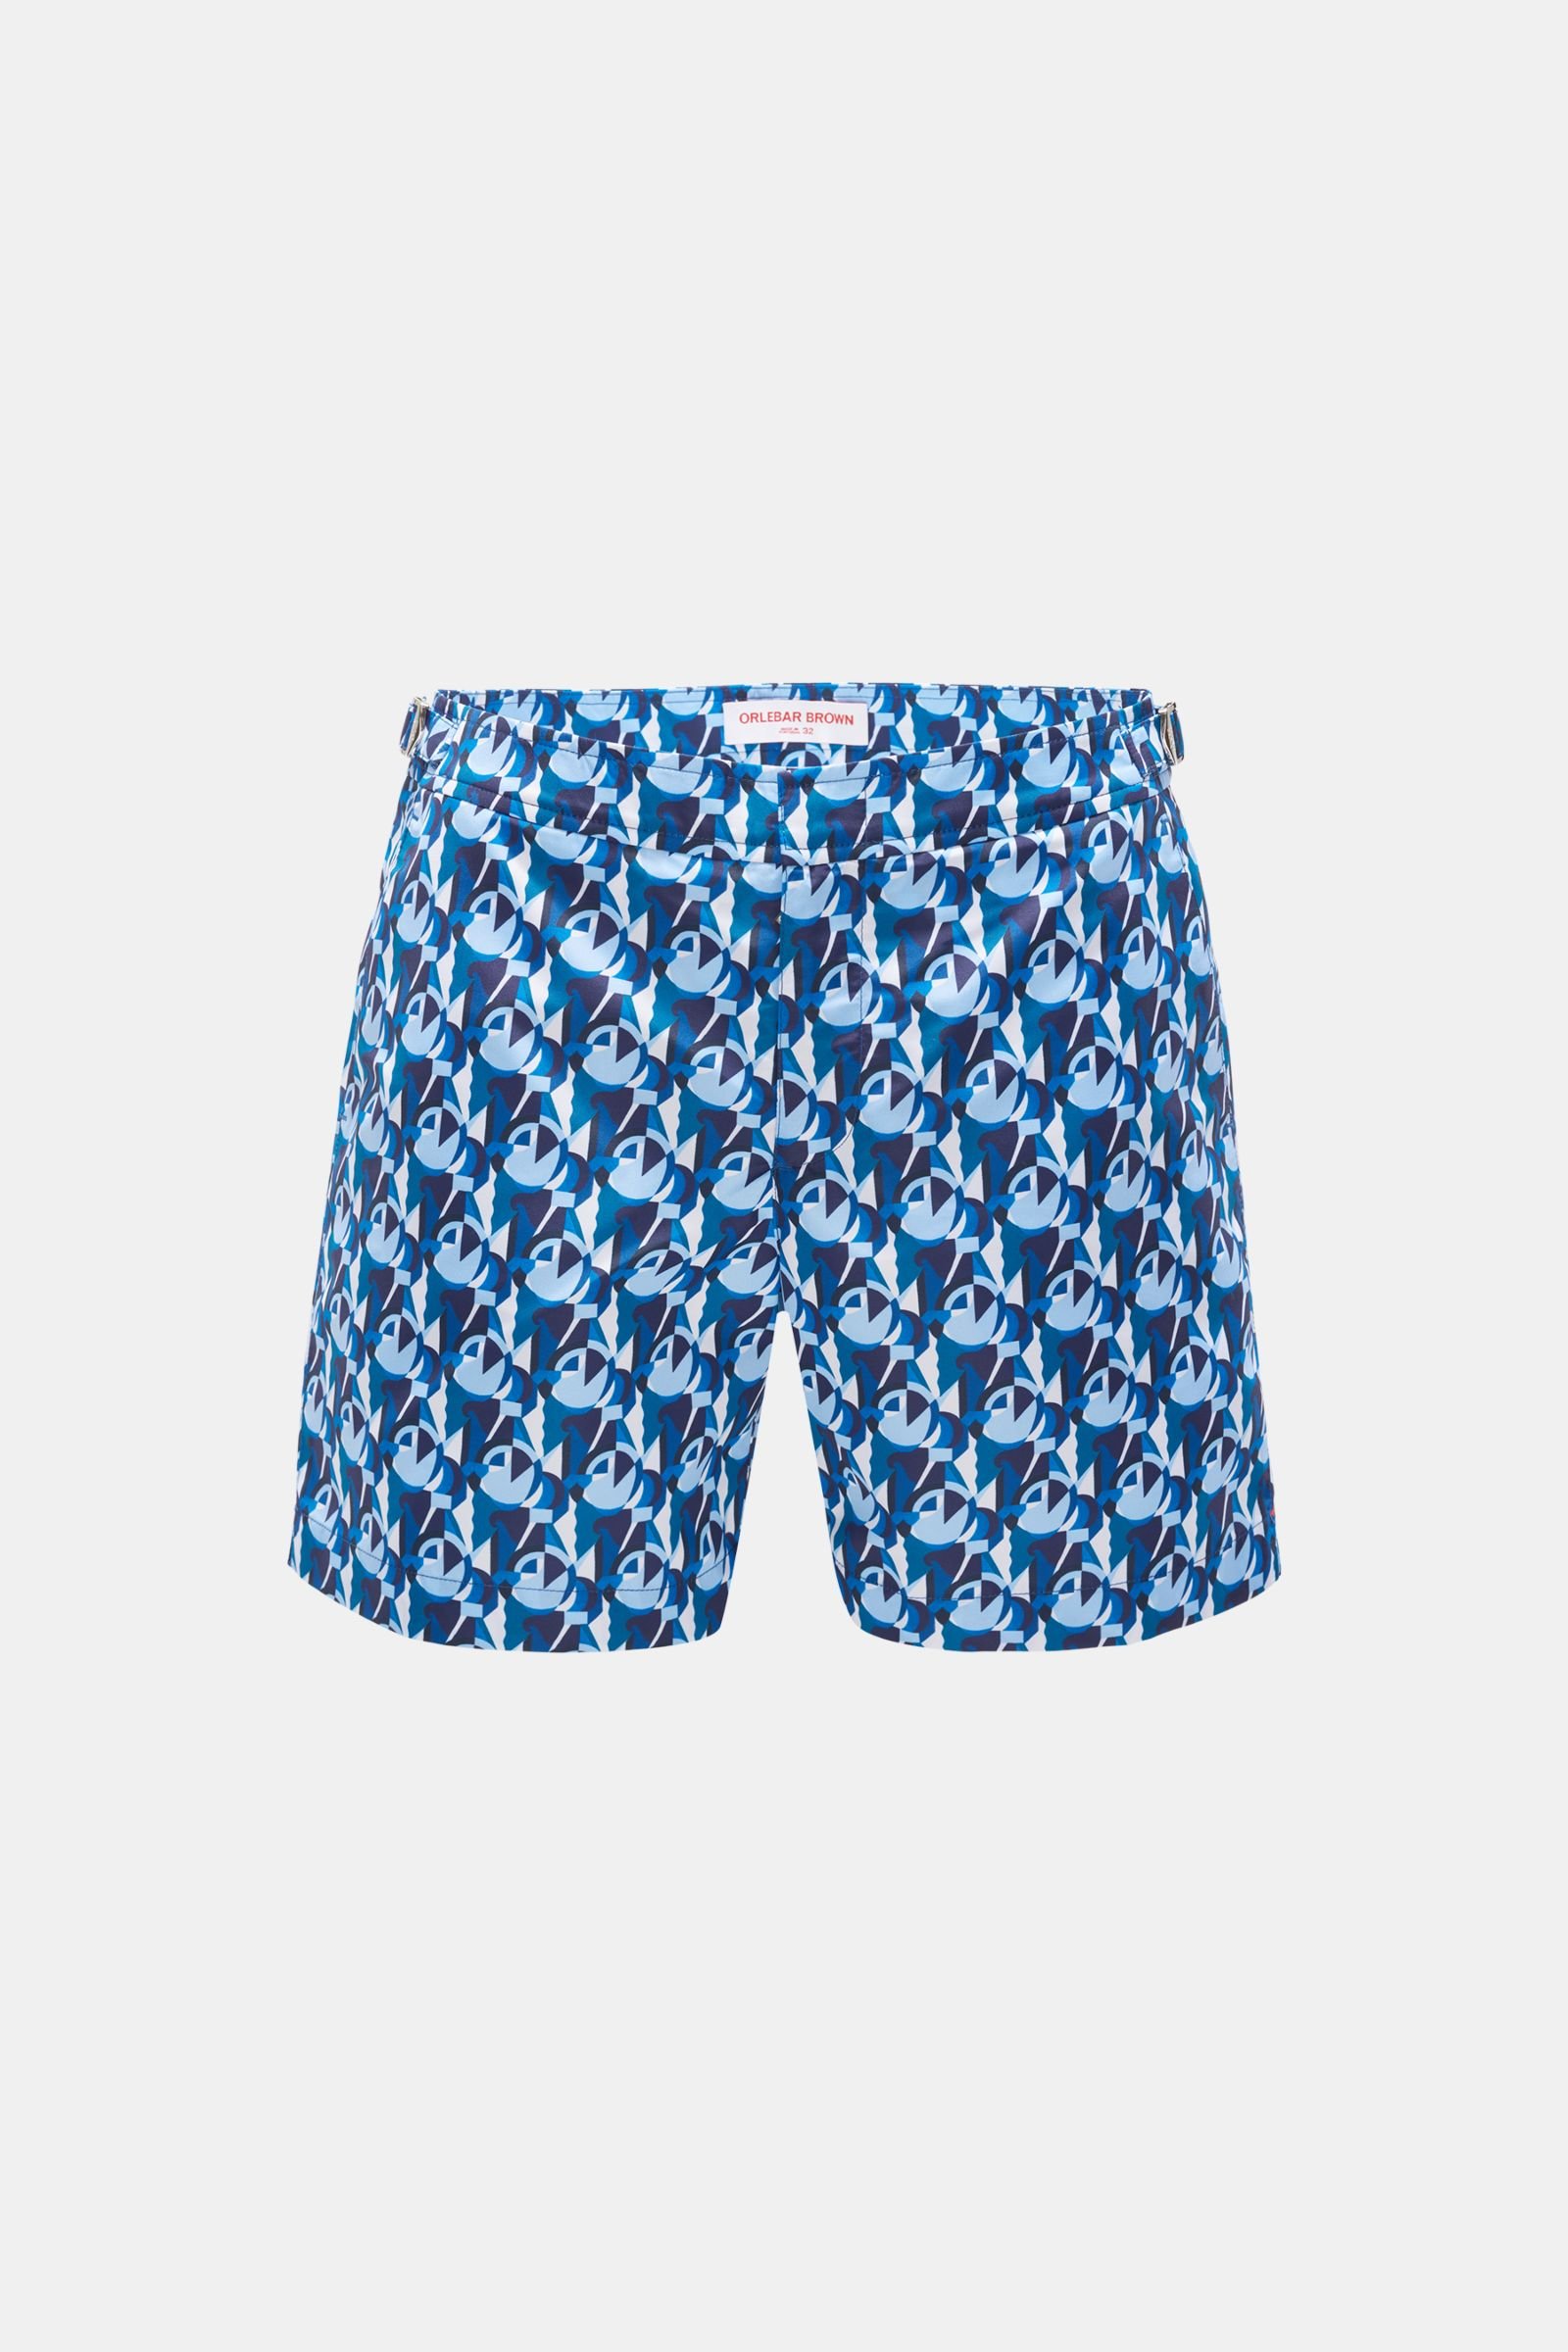 Swim shorts 'Bulldog' blue/white patterned